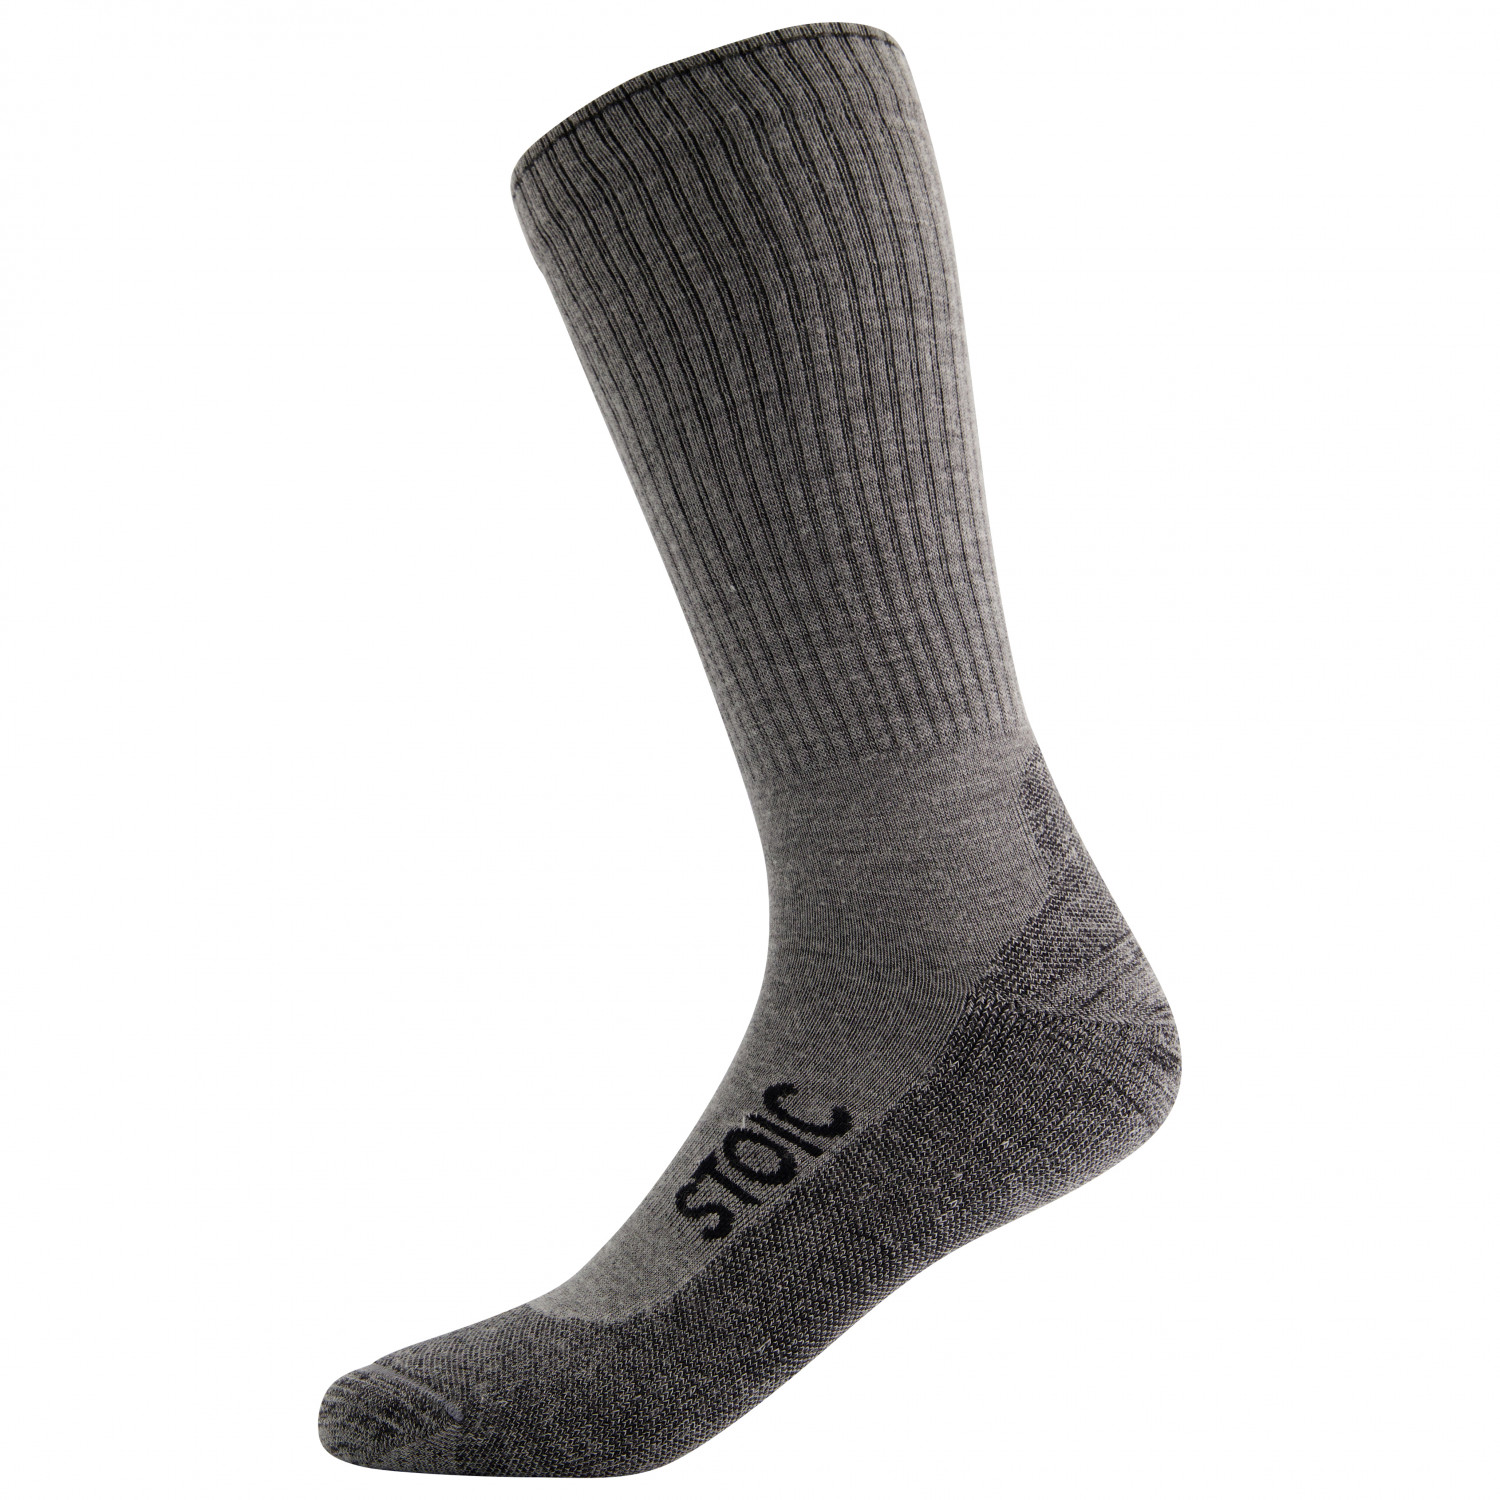 Походные носки Stoic Merino Wool Silk Hiking Socks, светло серый men wool merino socks for winter thermal warm thick hiking boot heavy soft cozy socks for cold weather 5 pack